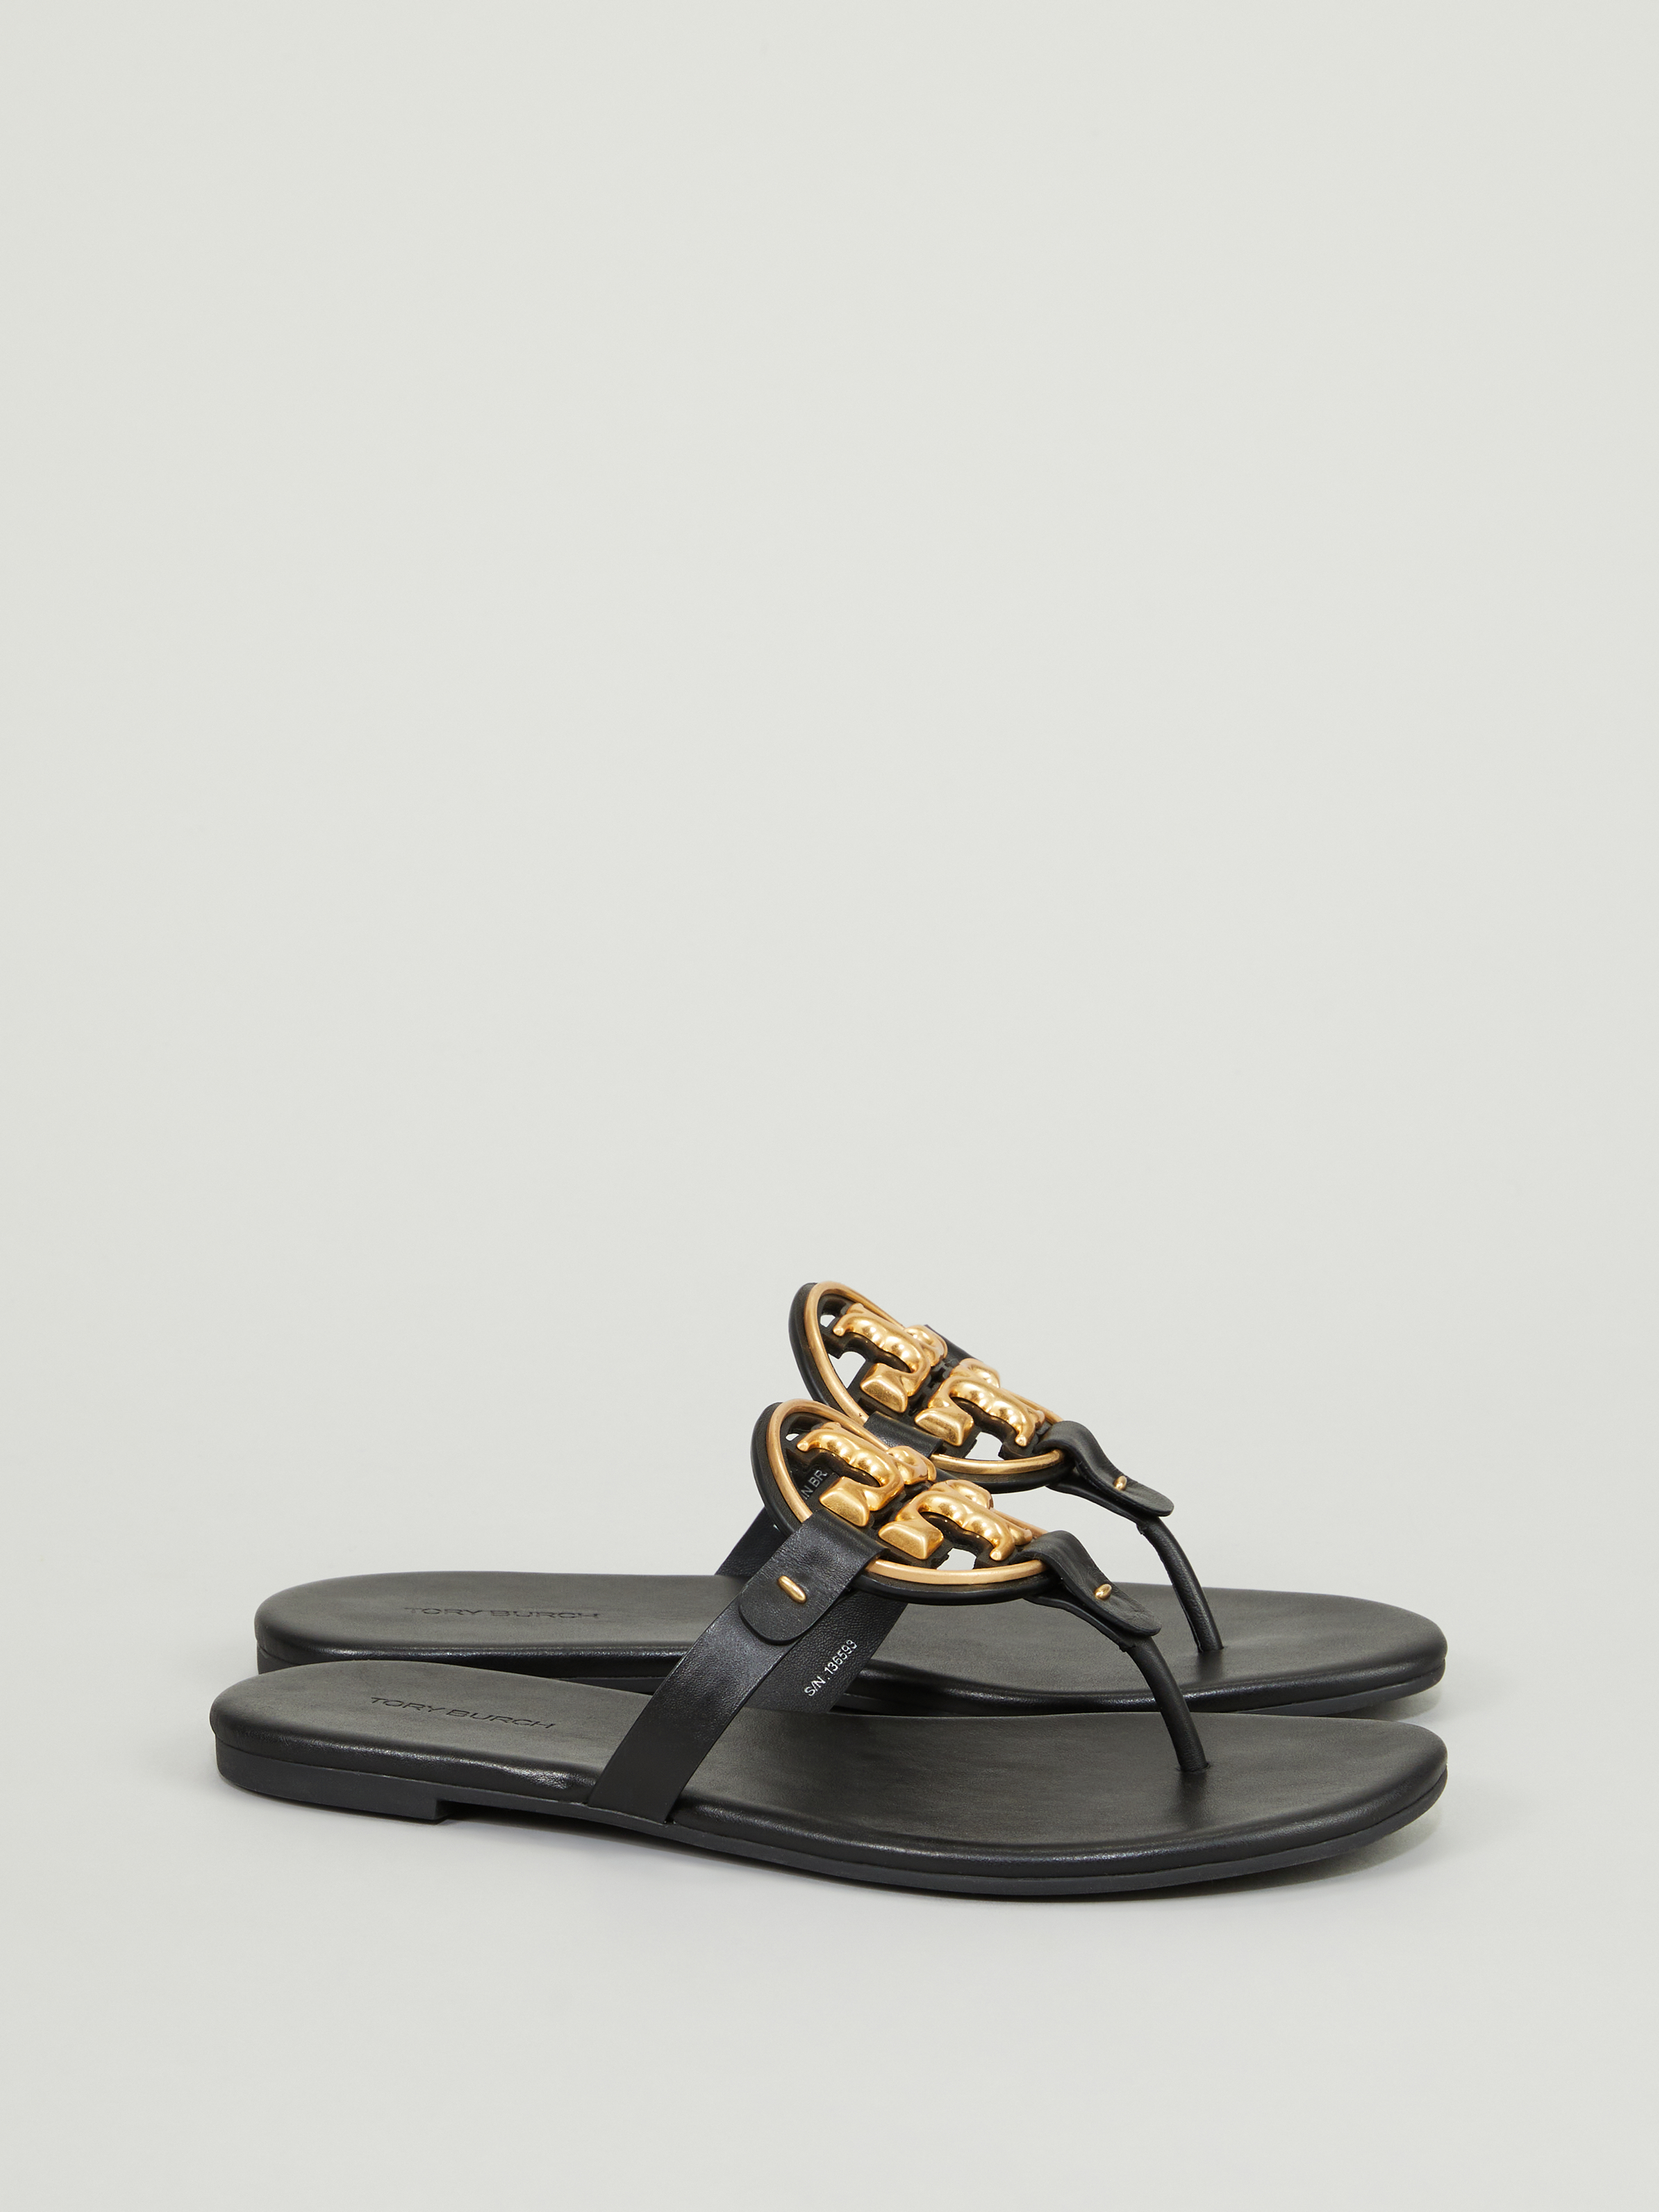 Tory Burch Sandals 'Miller' Black | Heeled Sandals